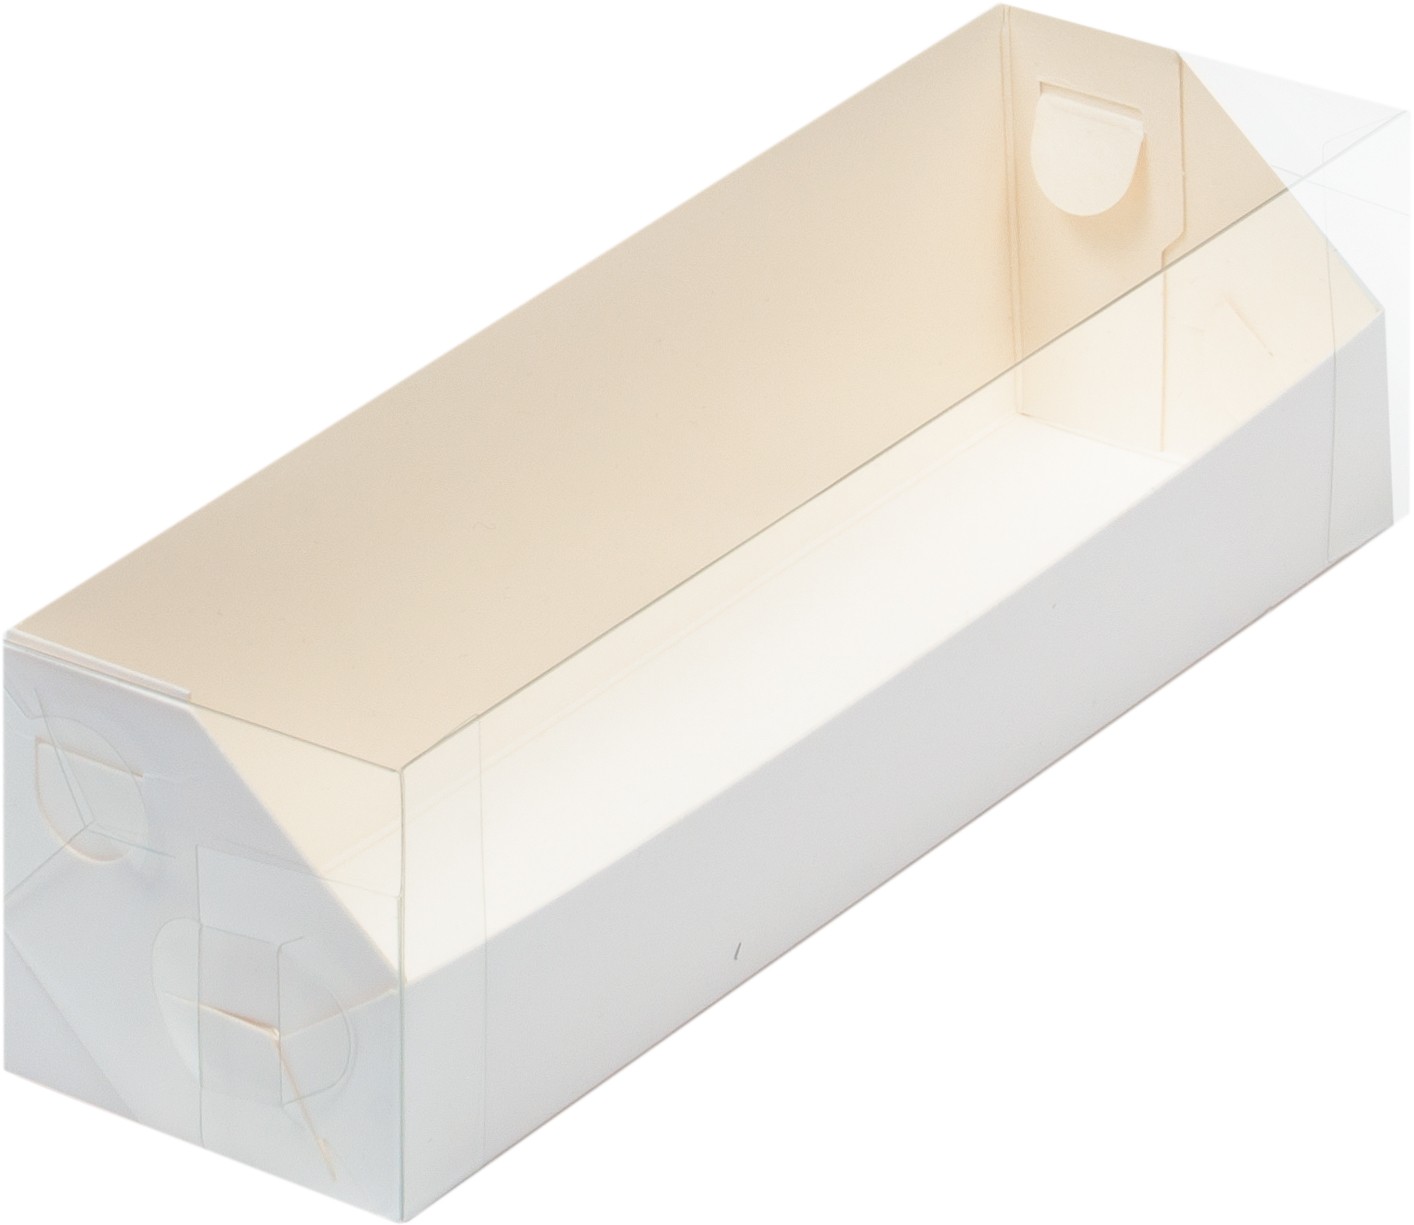 Коробка для макарон с пластиковой крышкой 19х5.5х5.5 см БЕЛАЯ